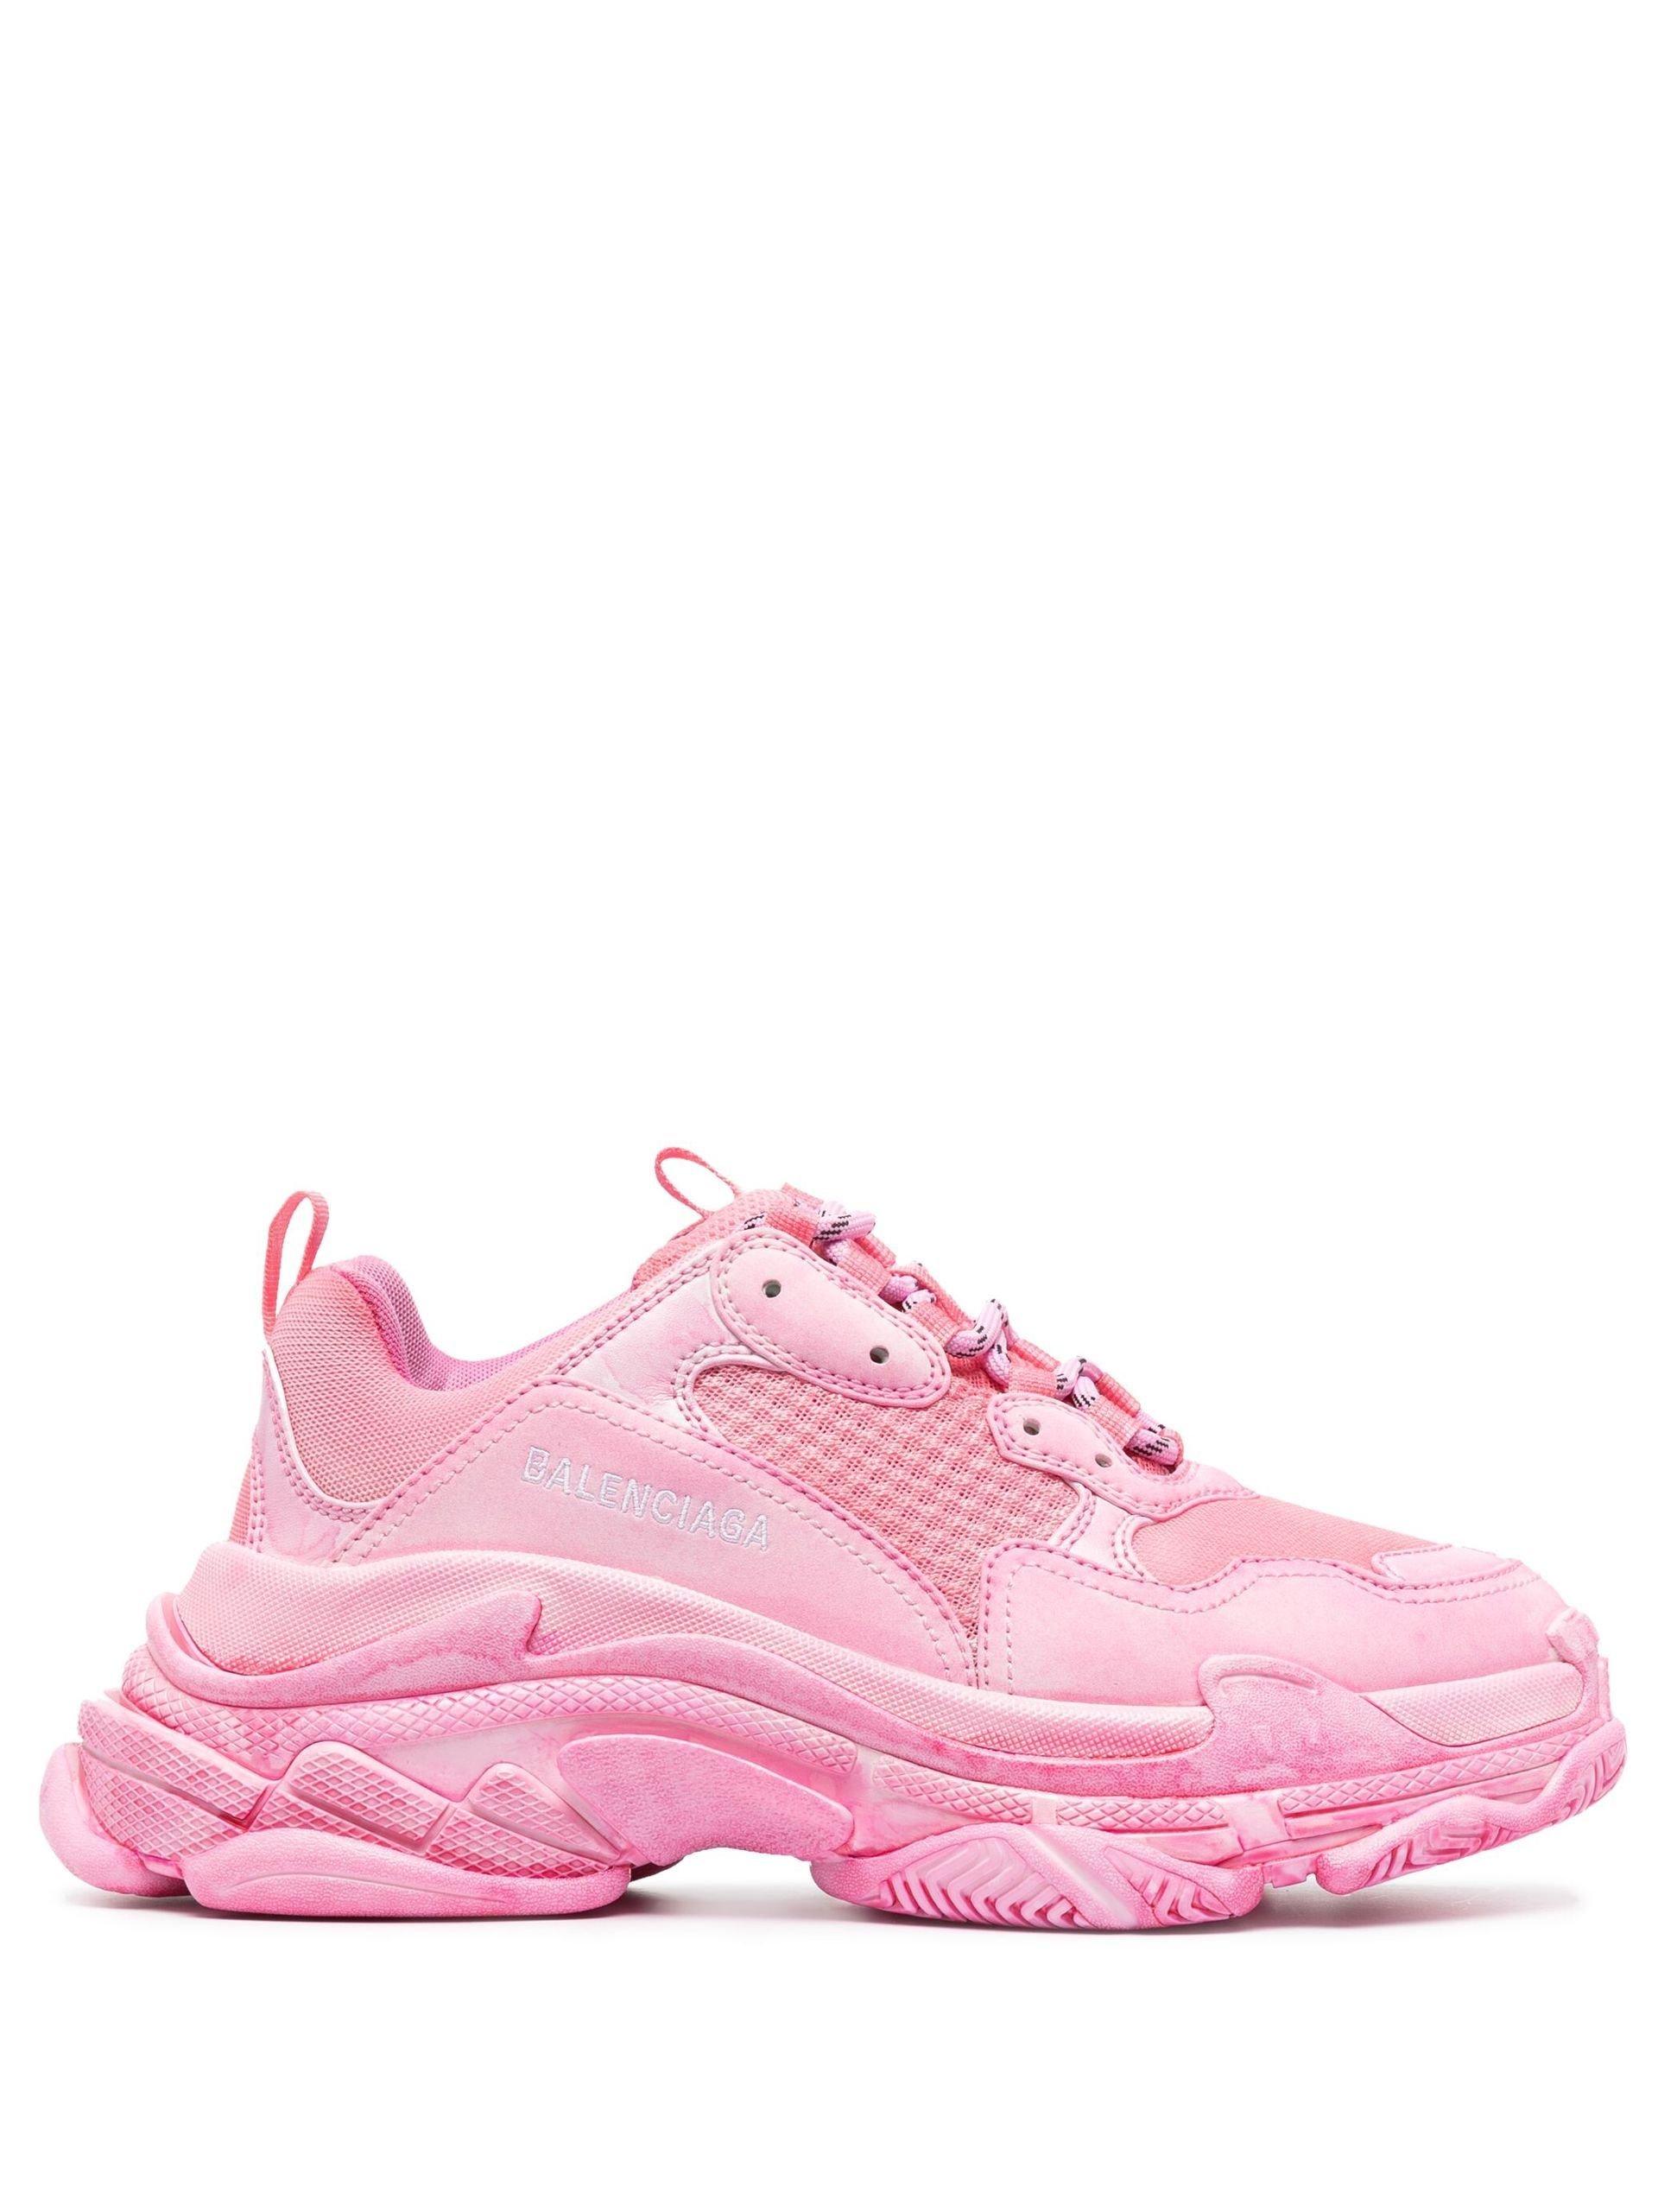 Balenciaga Triple S Sneakers in Pink | Lyst